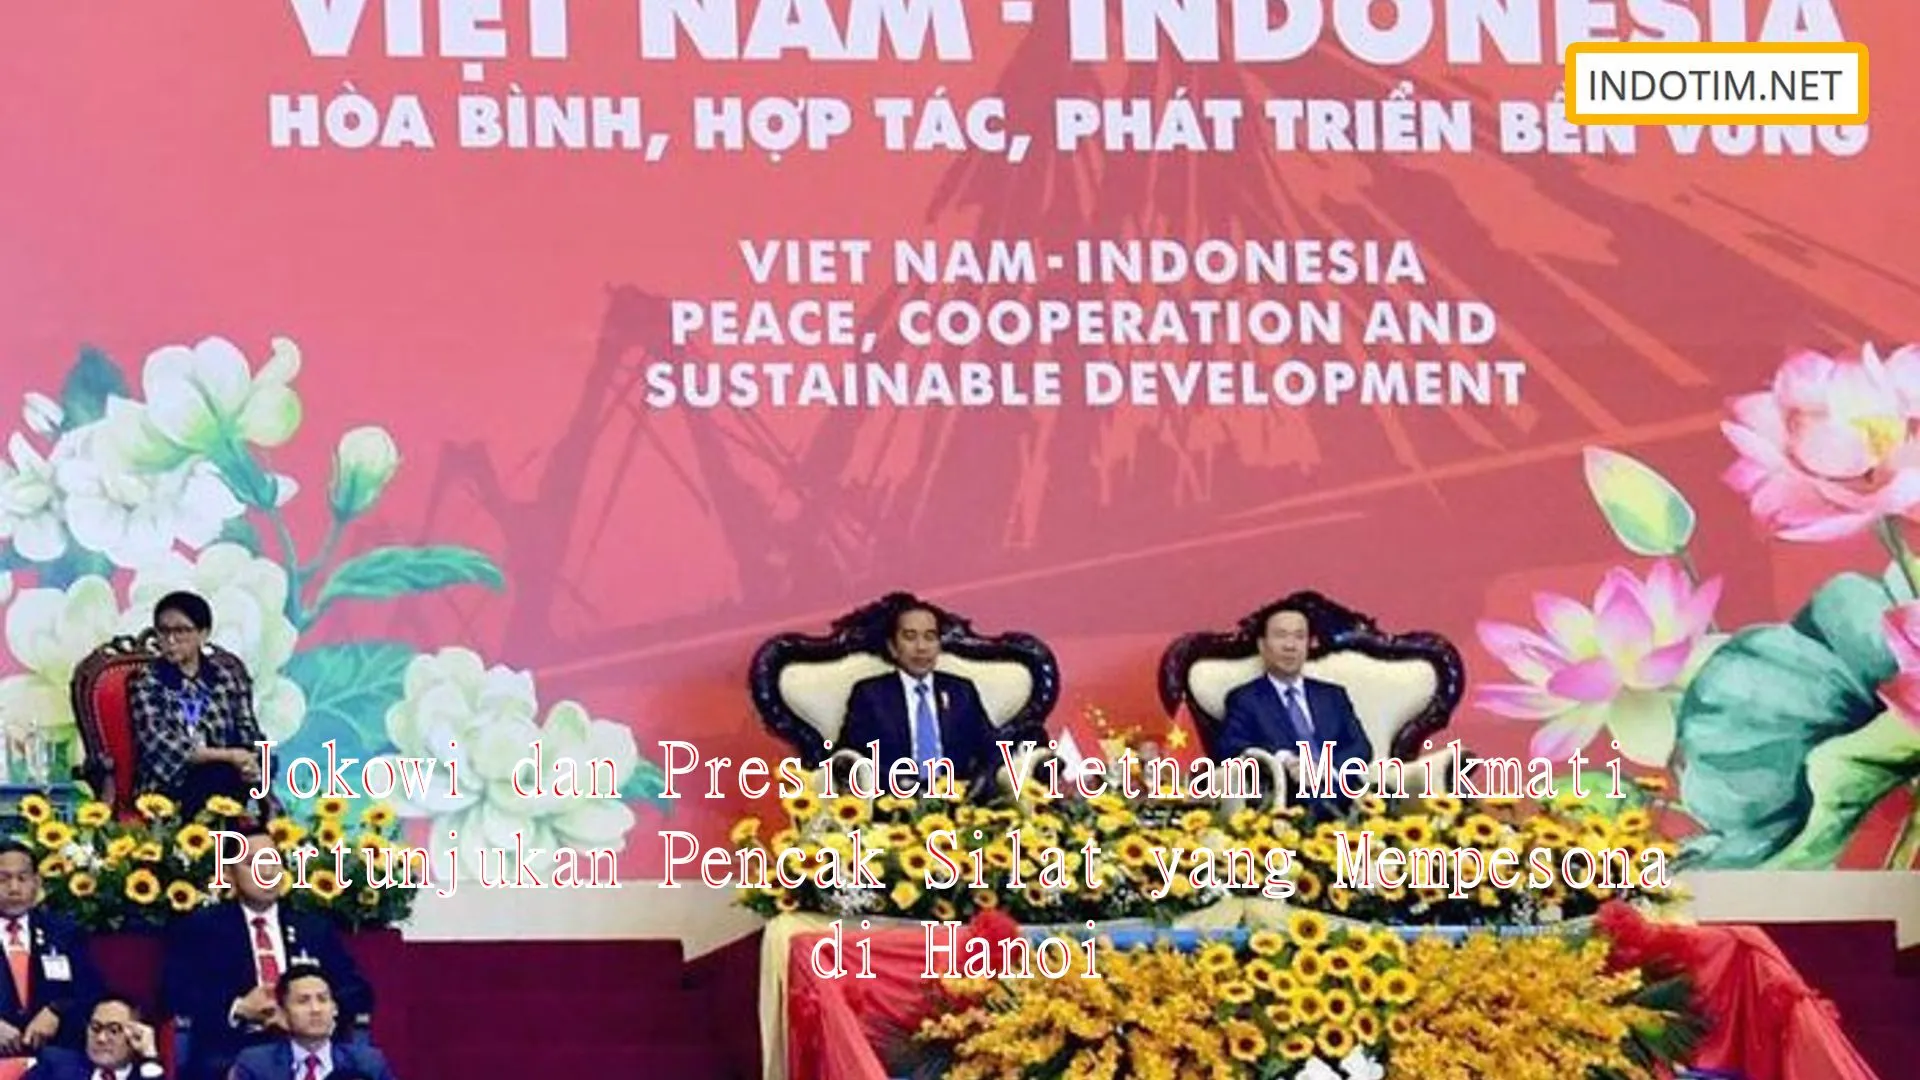 Jokowi dan Presiden Vietnam Menikmati Pertunjukan Pencak Silat yang Mempesona di Hanoi